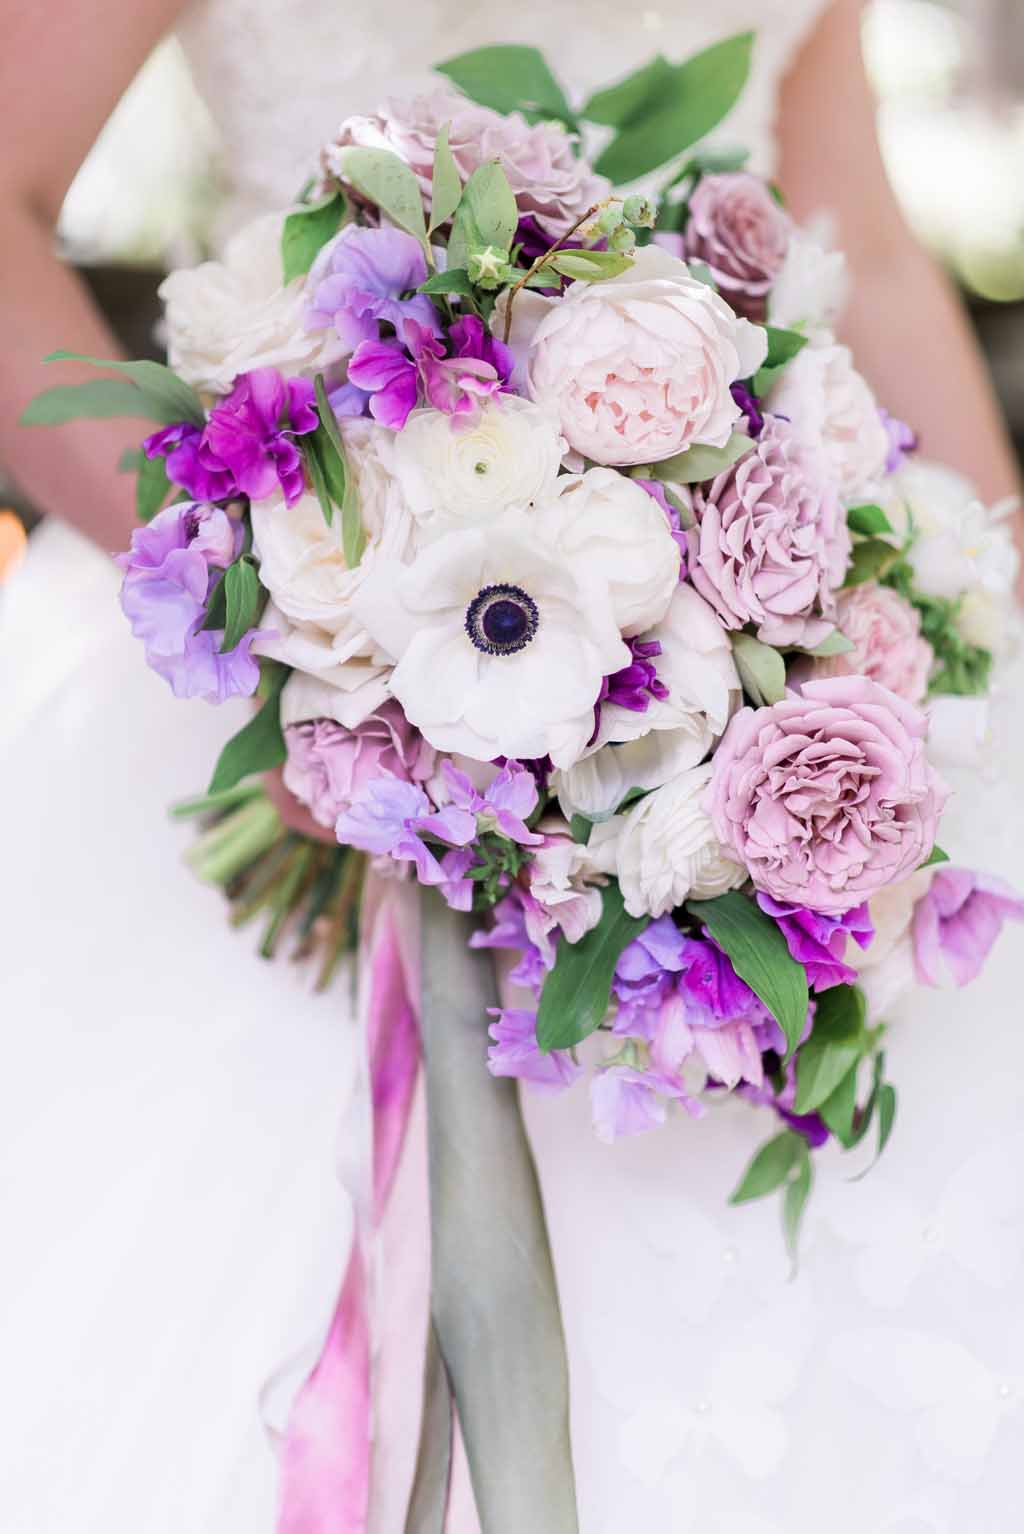 Bella Fiori Florist - Bella Luna Farms - Becca Jones Photography - Snohomish Washington - purple, lavender, white bridal bouquet with garden roses, sweet peas and anemones